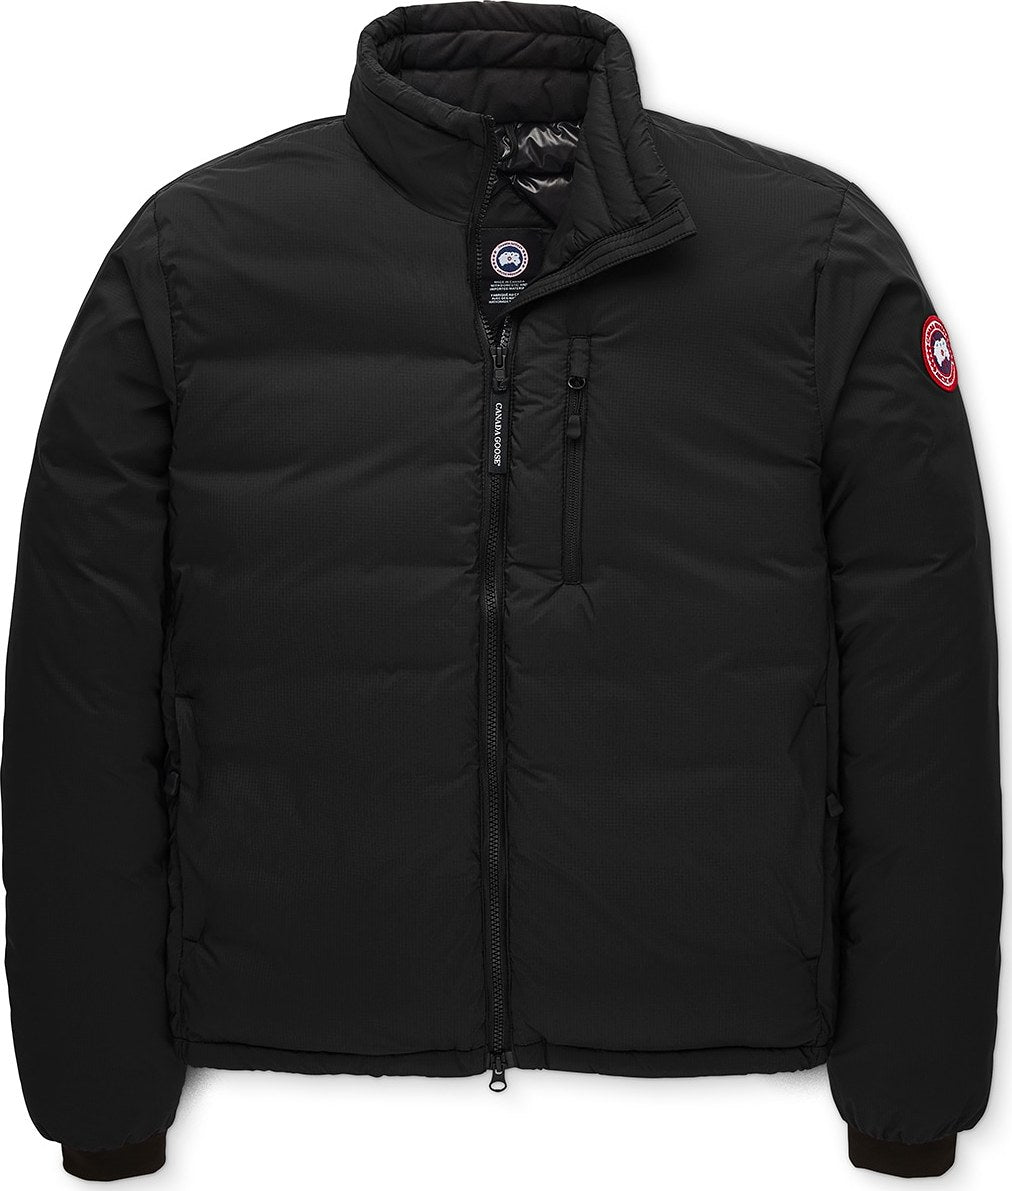 Canada Goose Lodge Jacket (Men, Black, S)